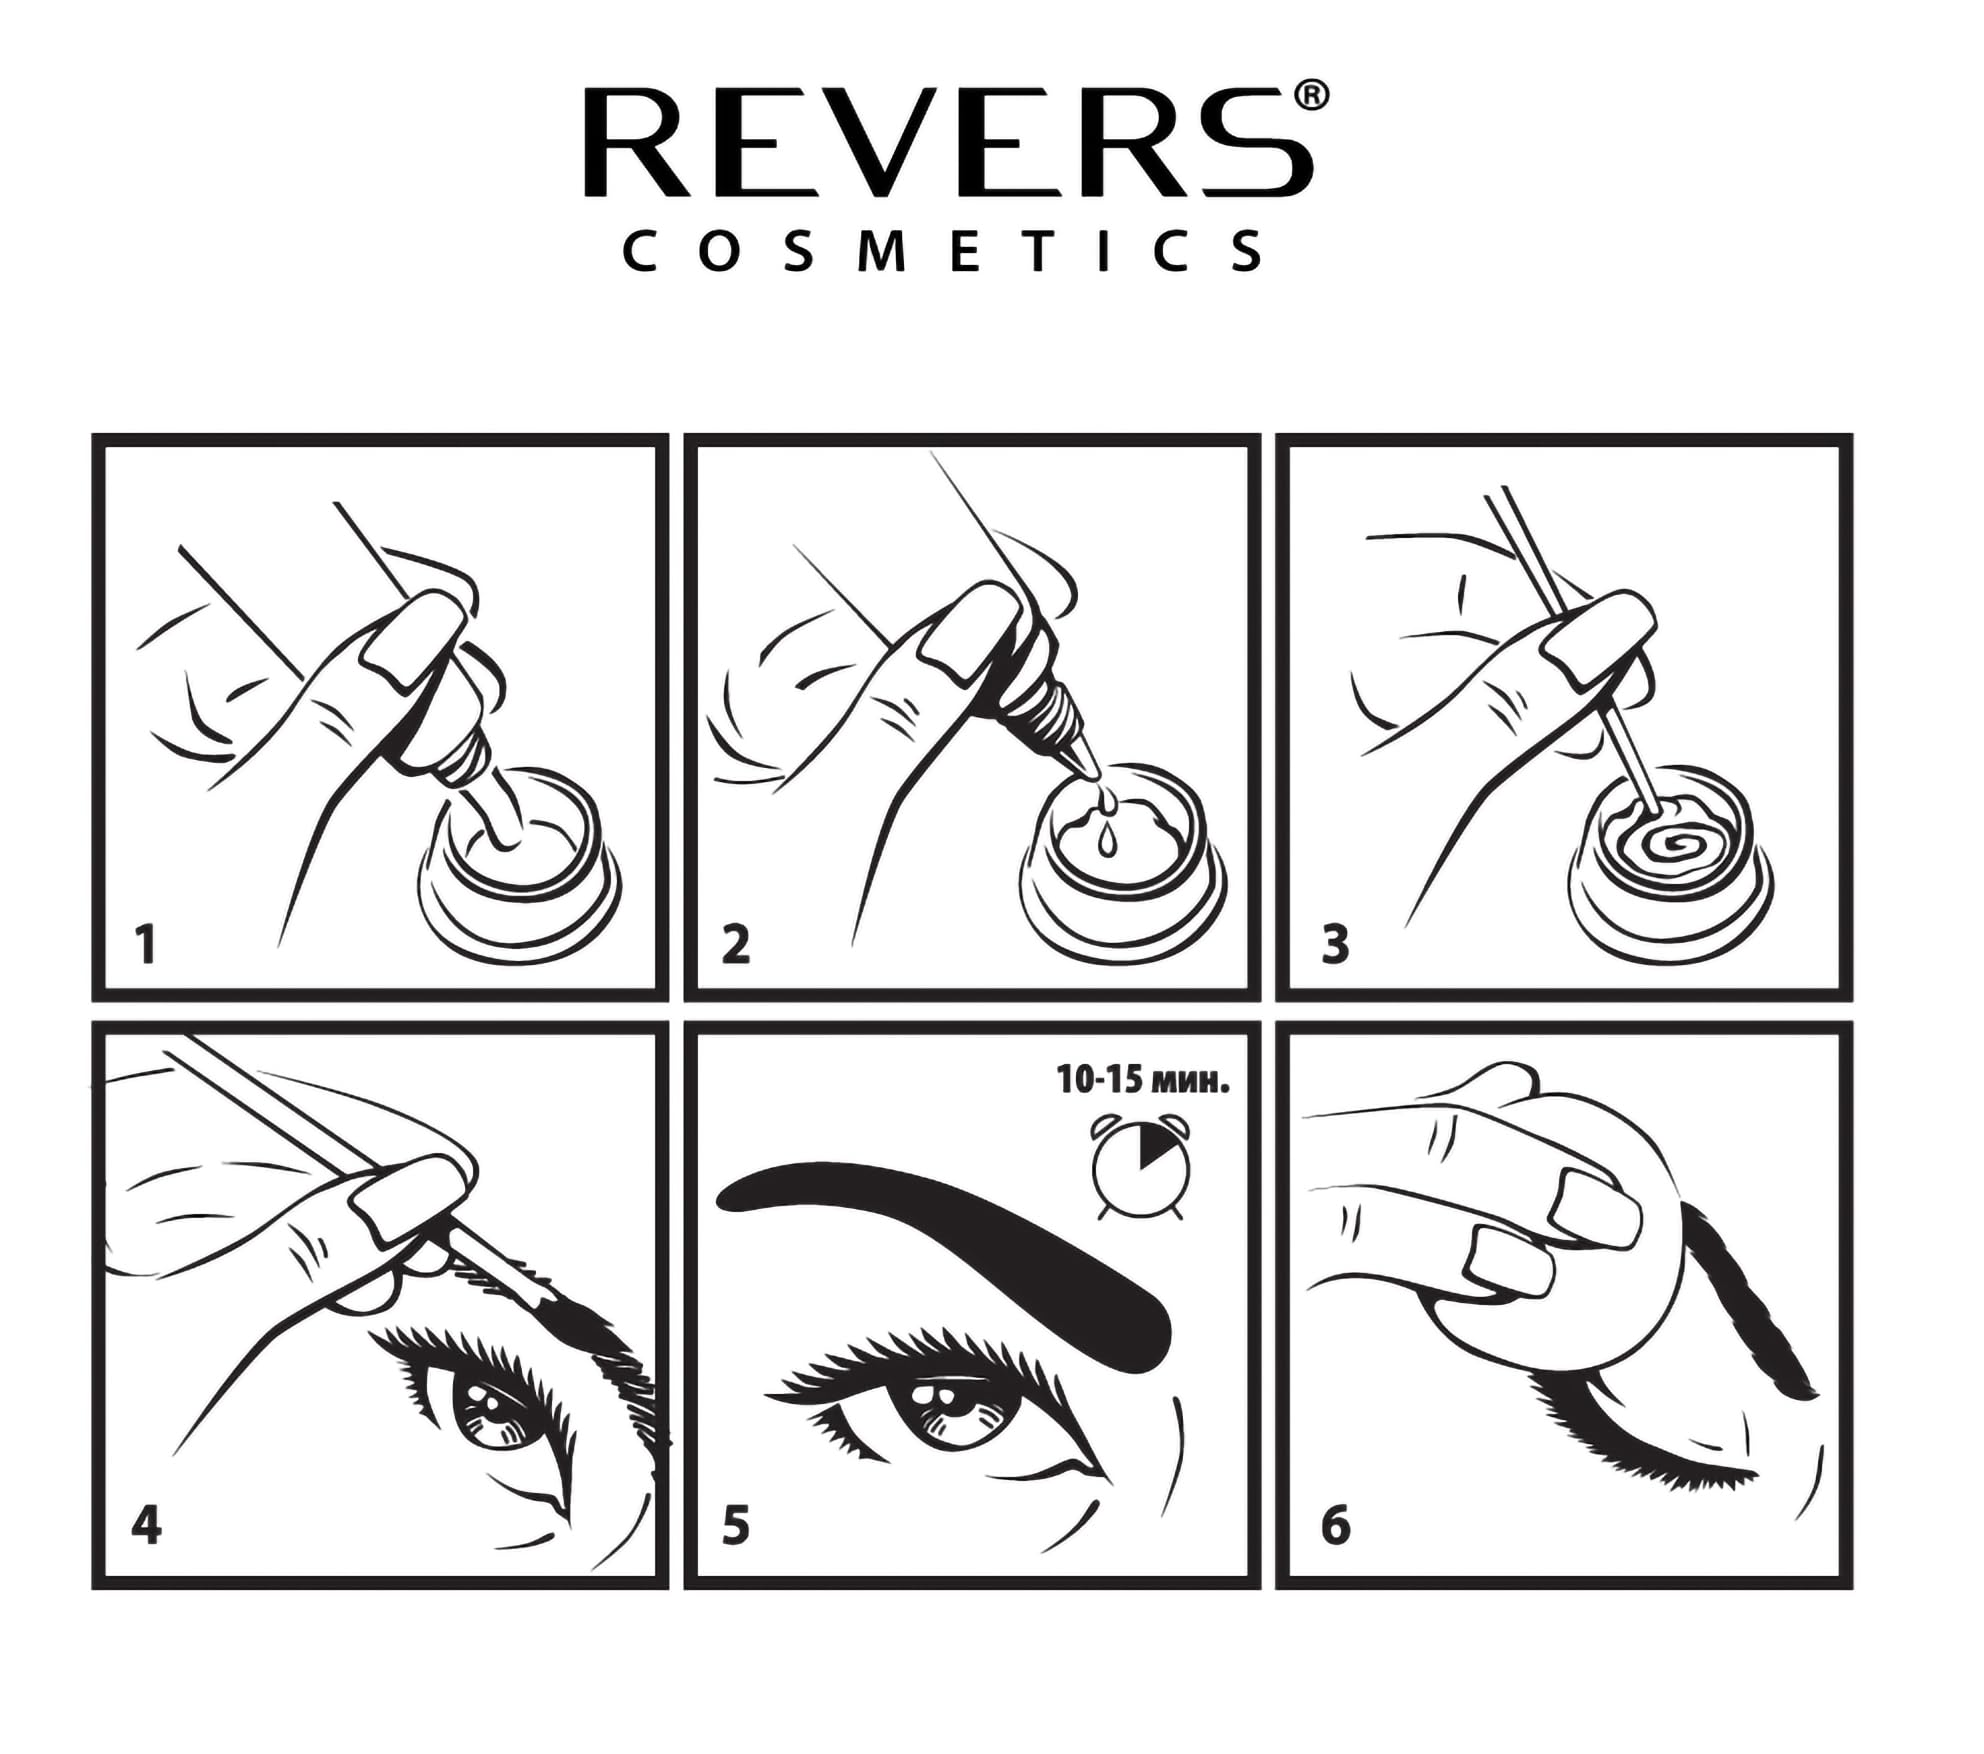 Revers Cream Hair Dye with Argan Oil and Castor Oil, Eyelash and Eyebrow tint , Black Color